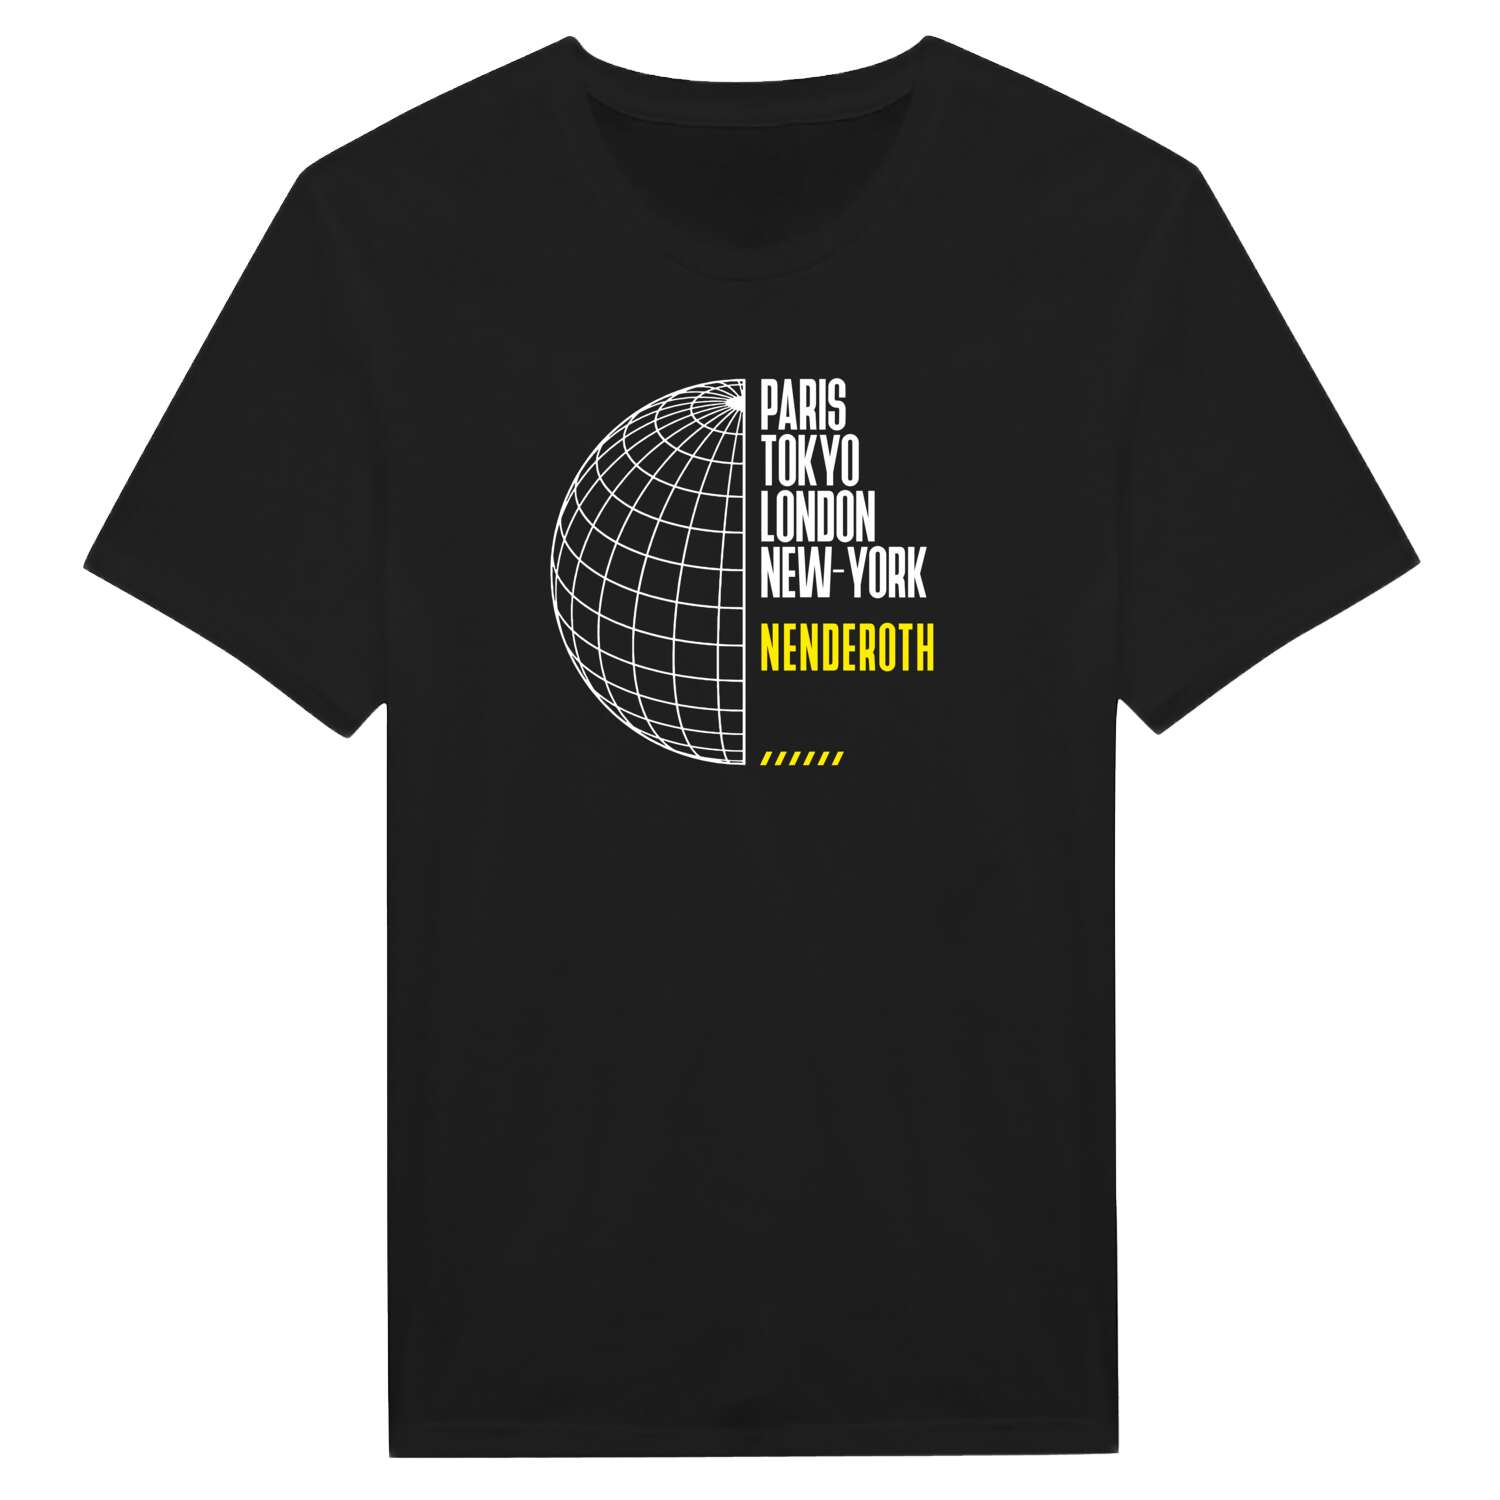 Nenderoth T-Shirt »Paris Tokyo London«